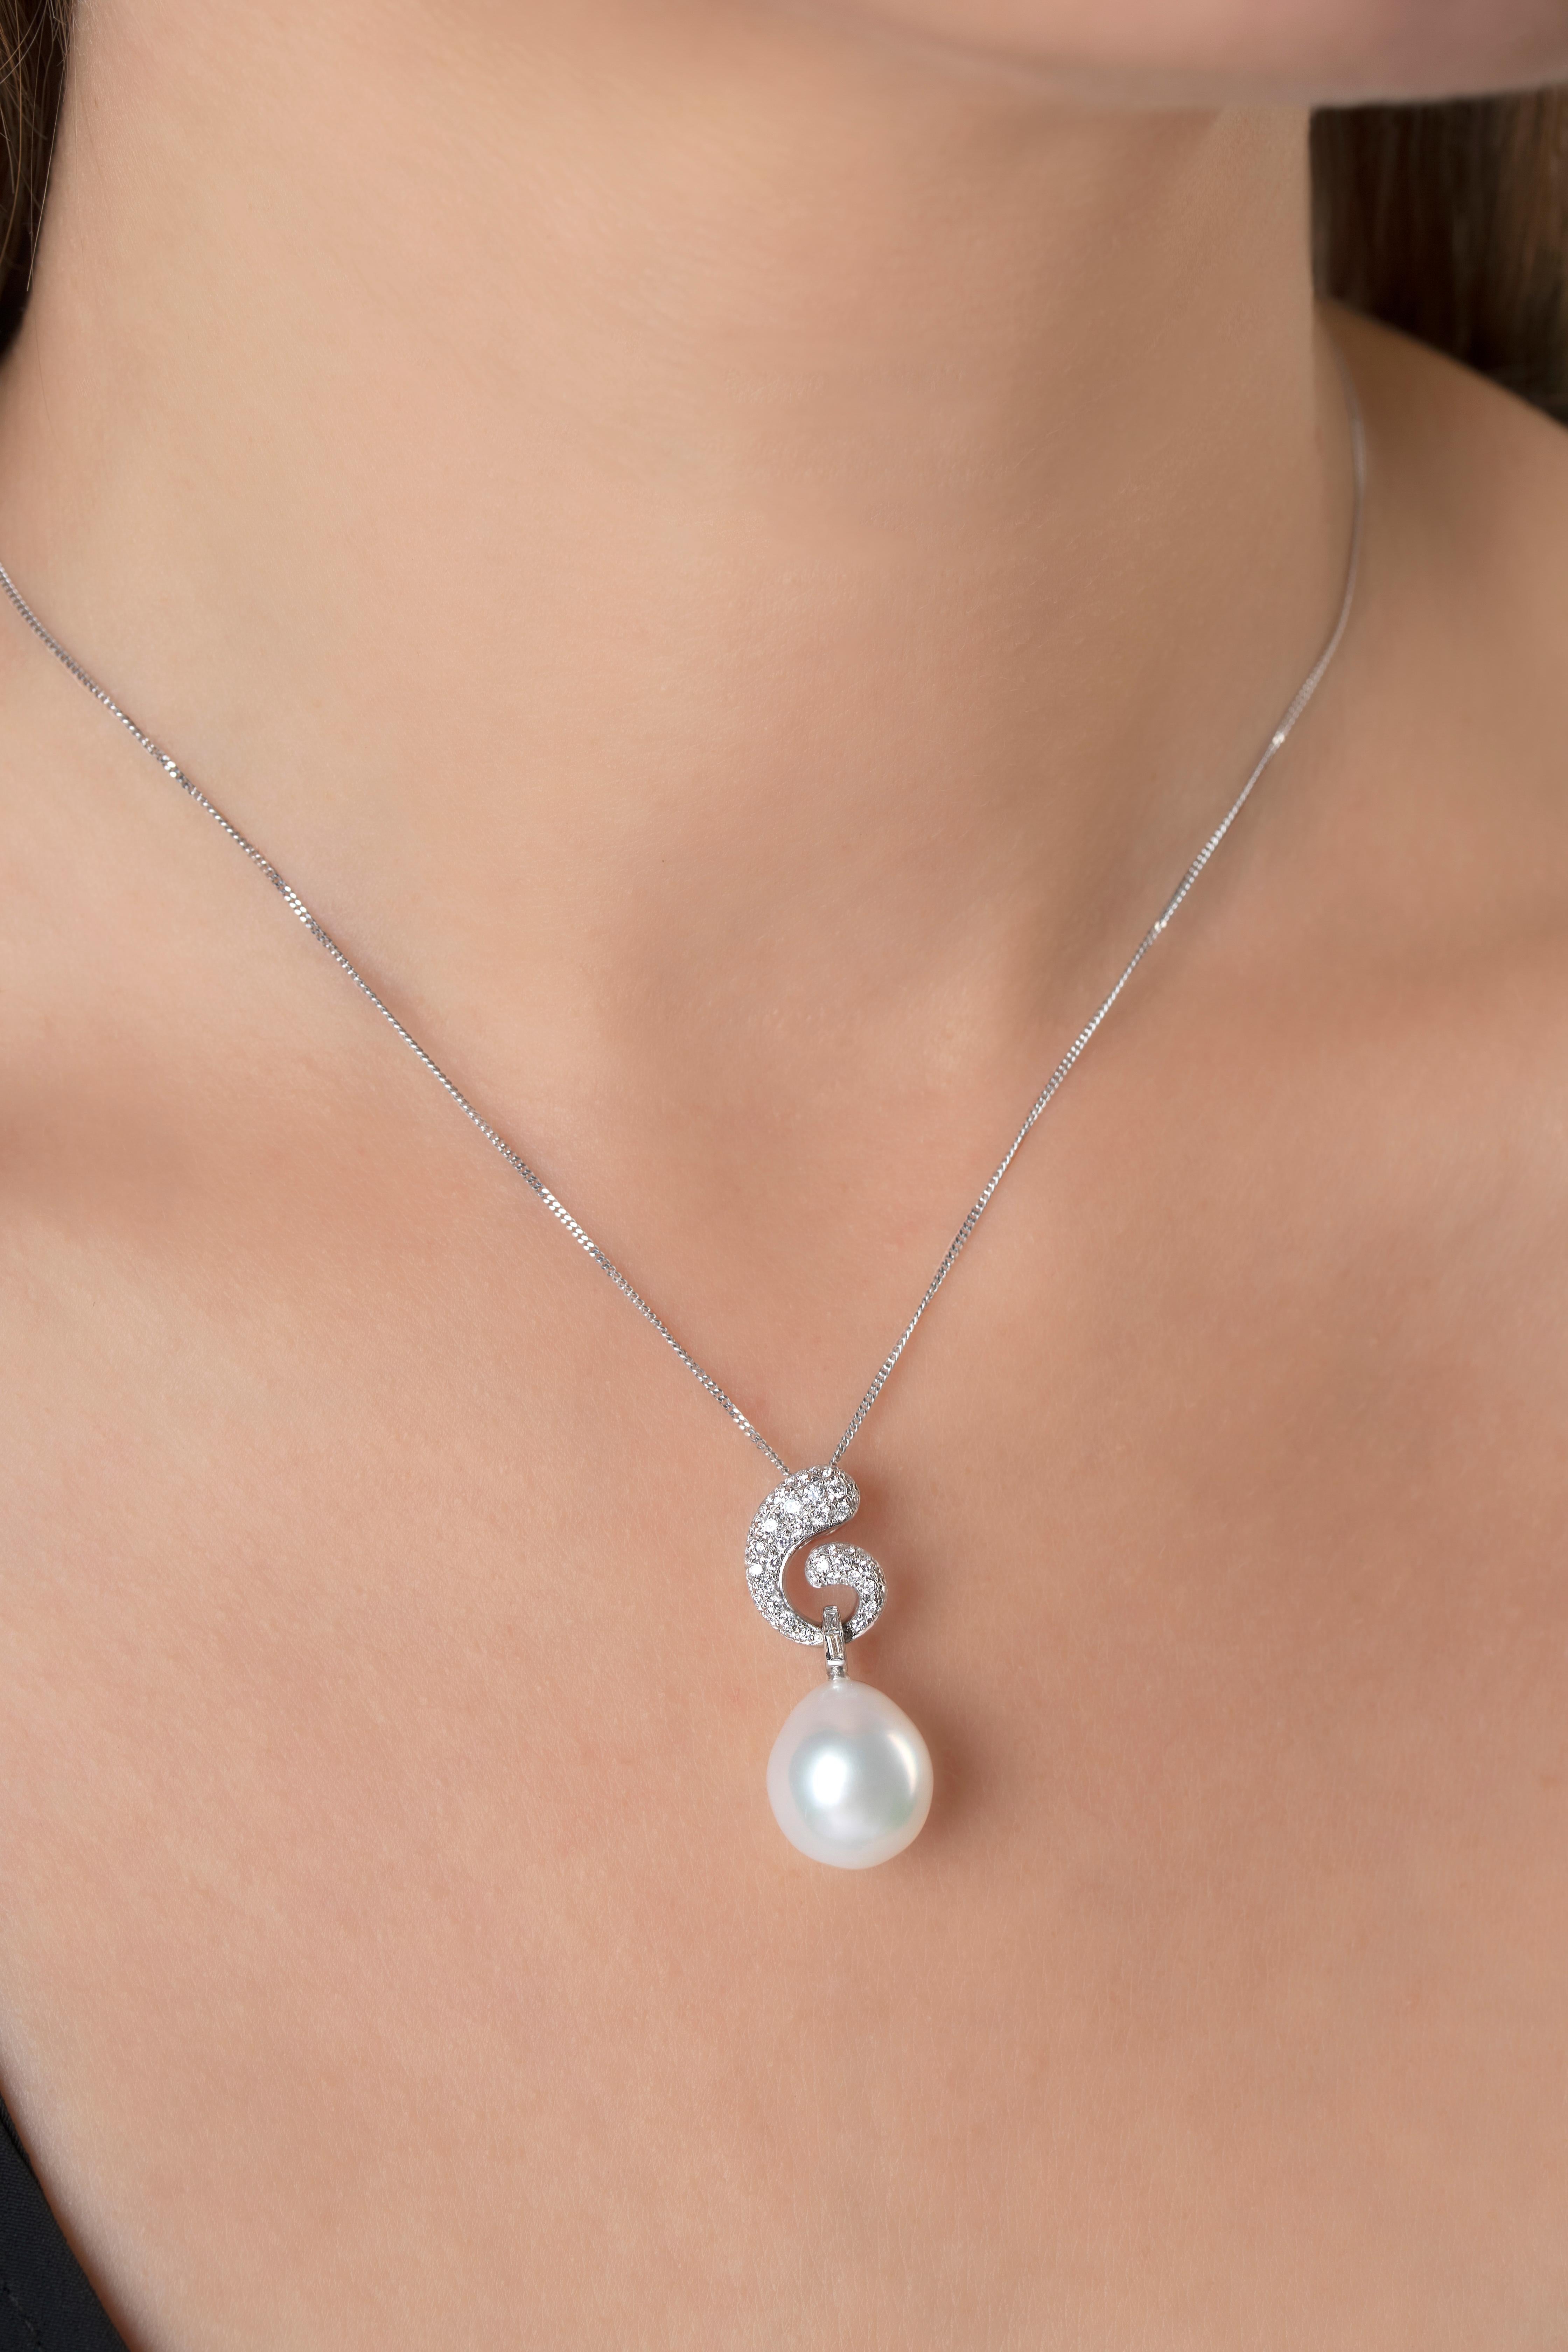 Contemporary Yoko London South Sea Pearl and Diamond Pendant in 18 Karat White Gold